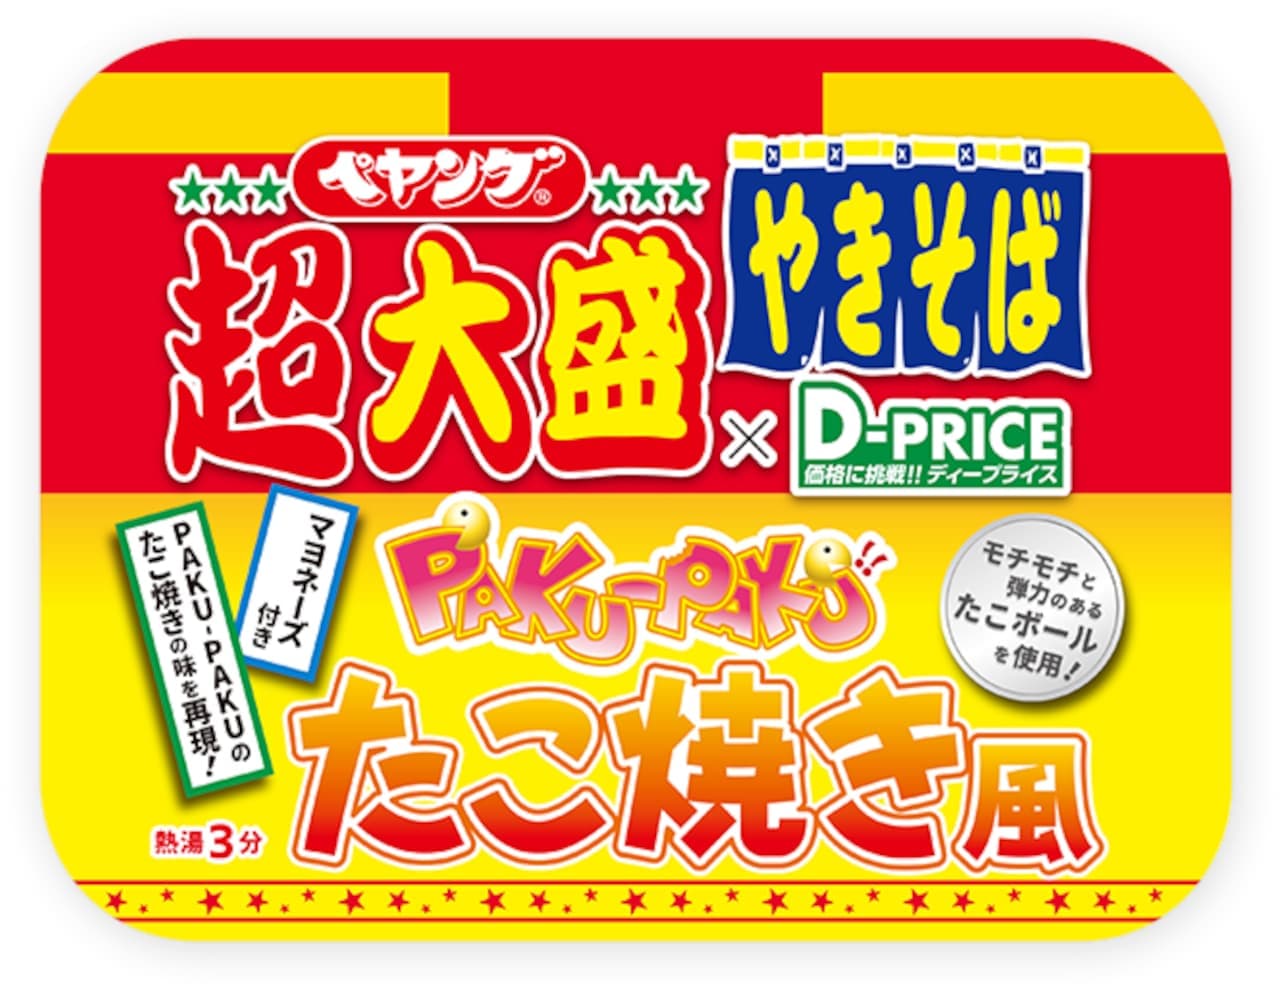 Maruka Foods "Peyoung Super Large Takoyaki-style Yakisoba